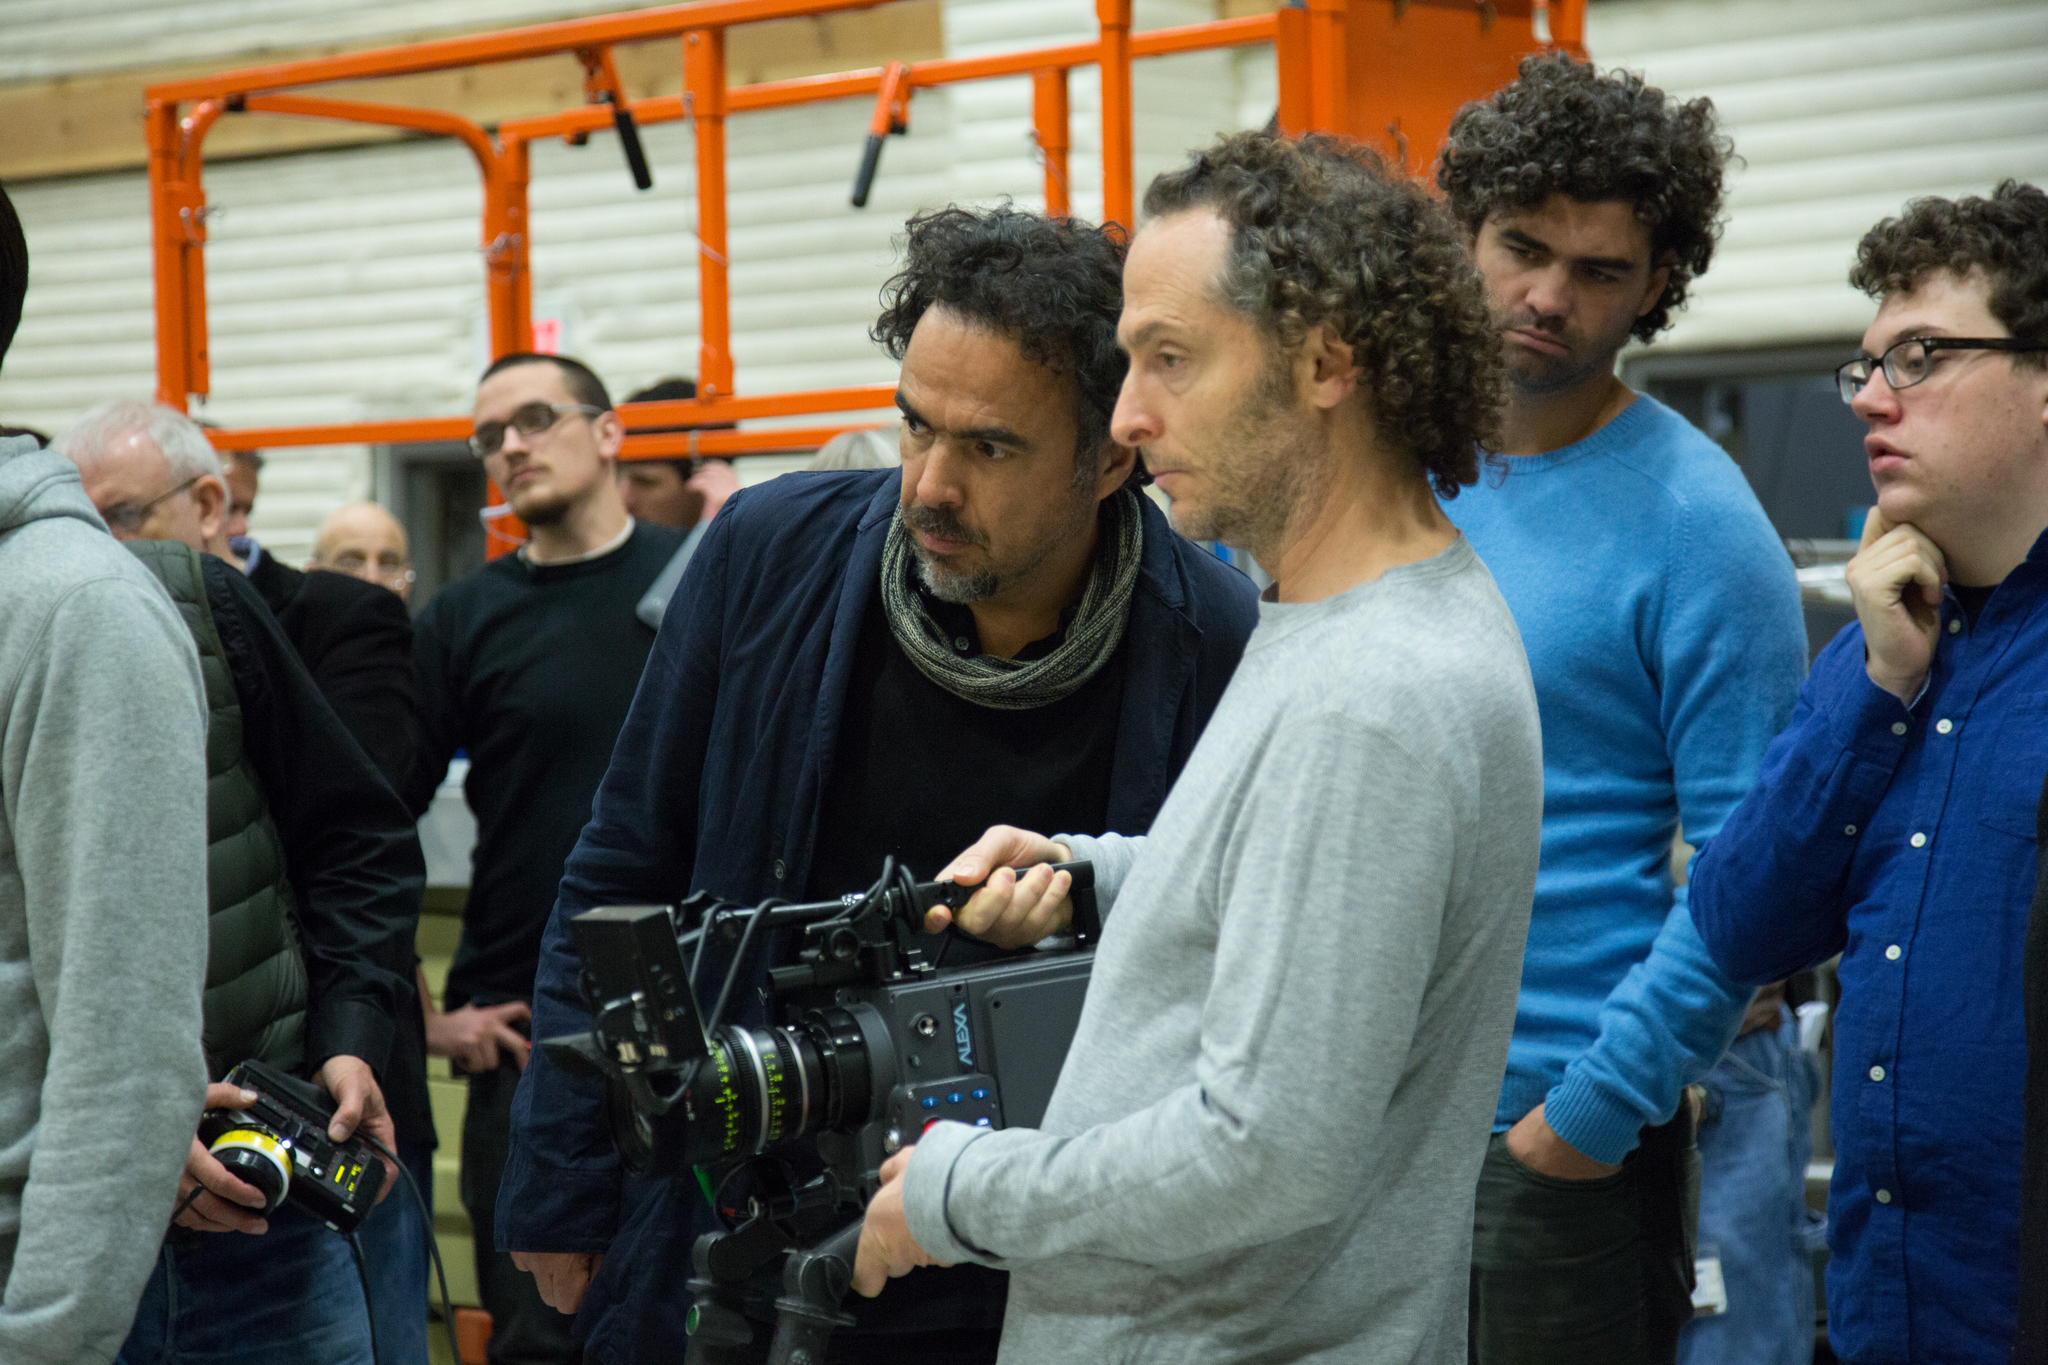 Alejandro González Iñárritu and Emmanuel Lubezki in Zmogus-paukstis (2014)